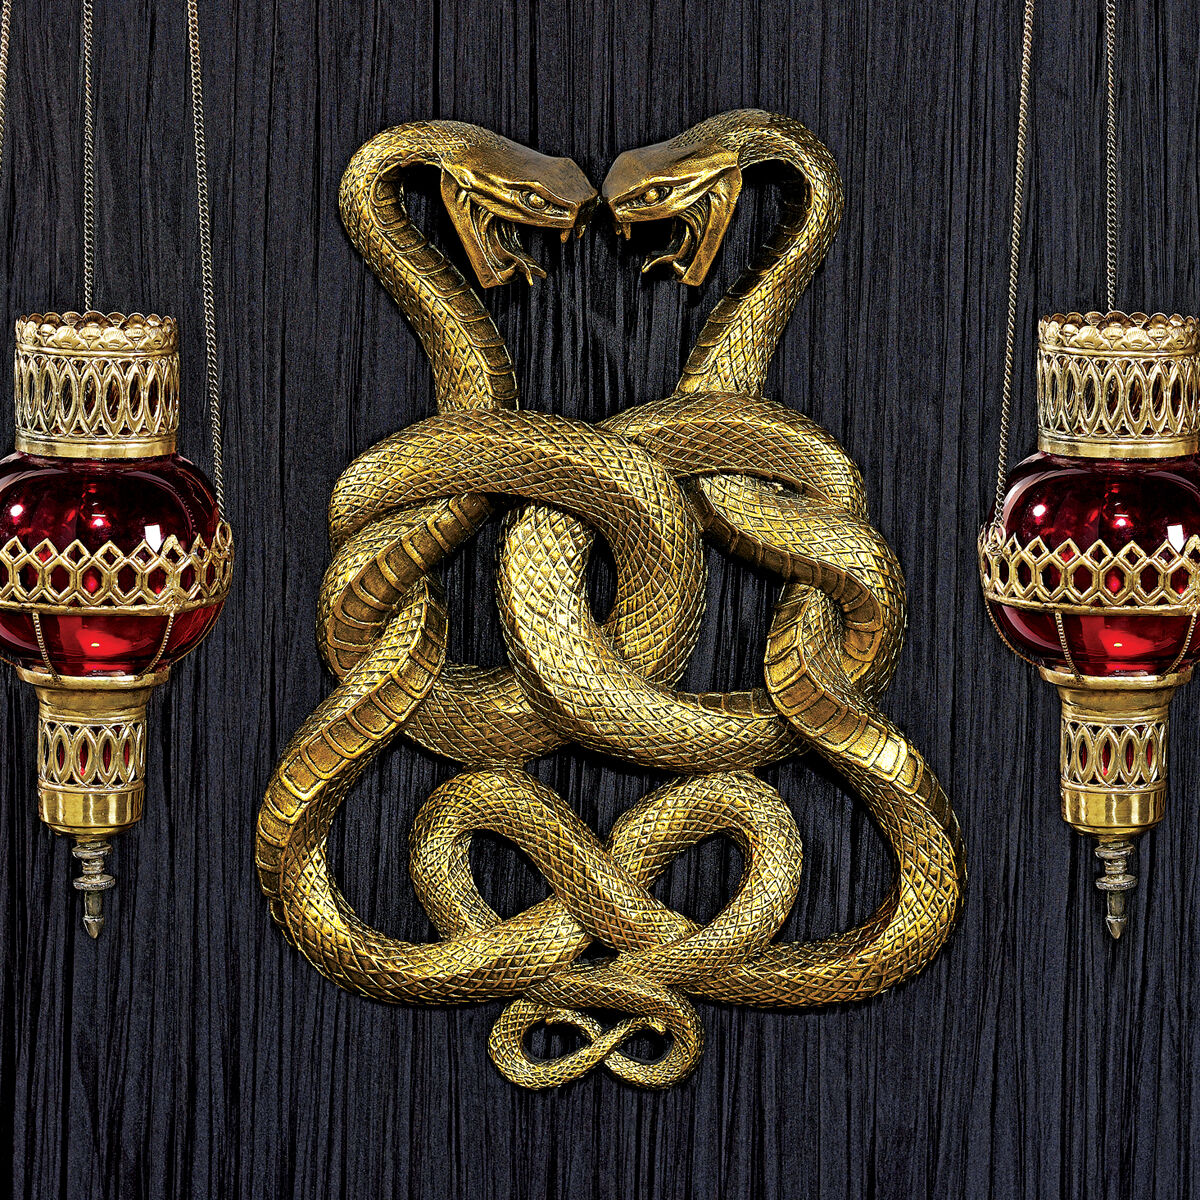 Egyptian Twin Cobras Legendary Infinity Symbol Regal Wall Plaque Sculpture